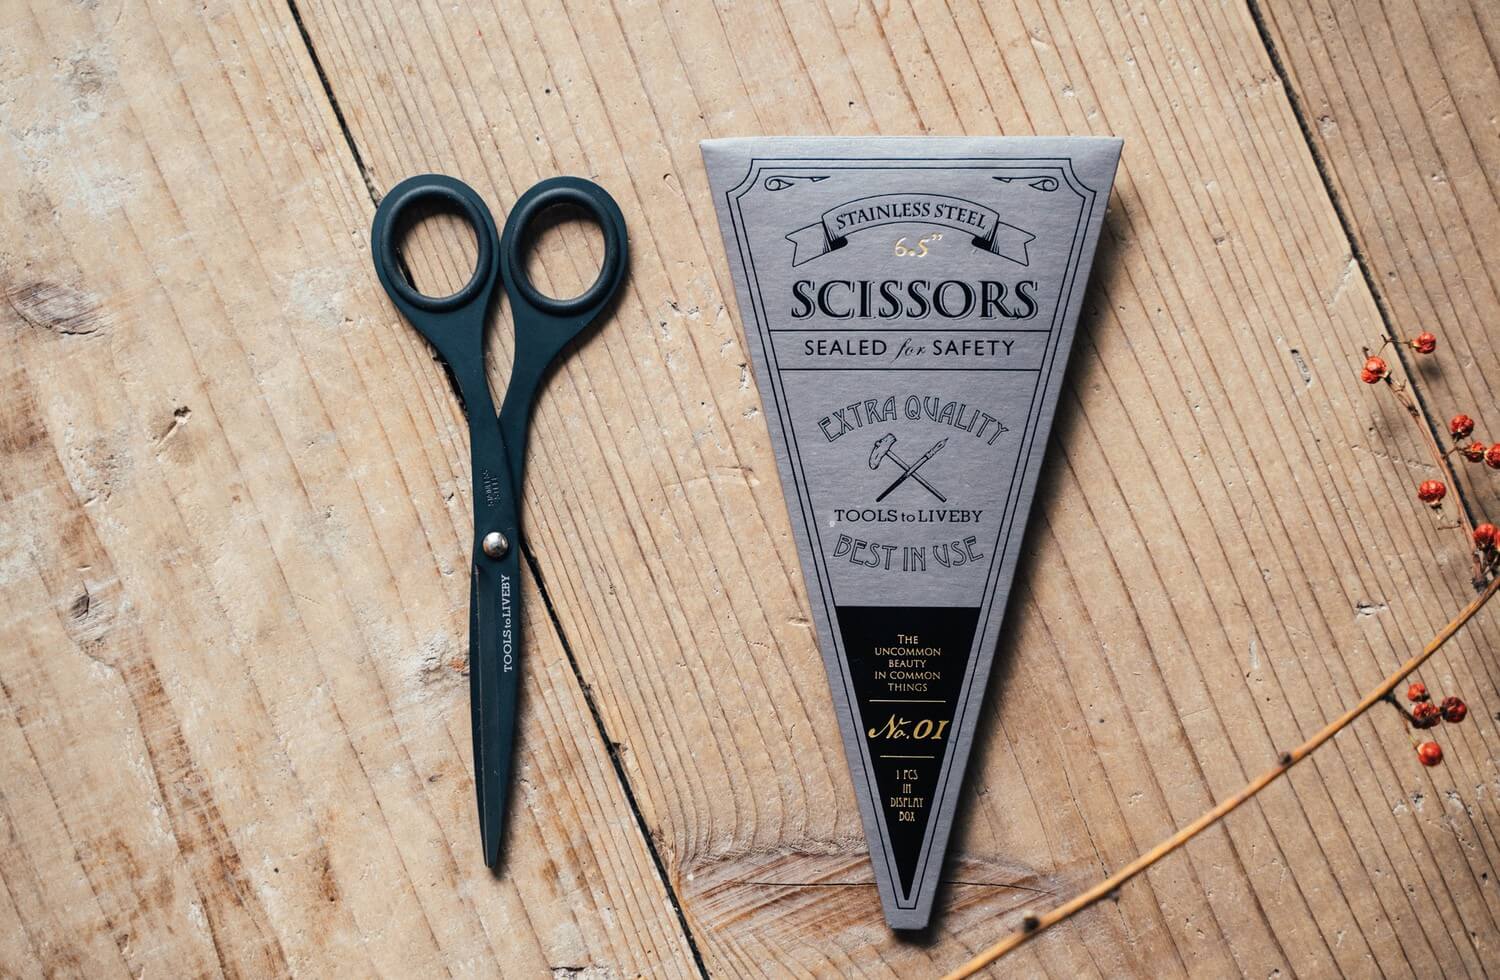 Tools to liveby scissors 0007